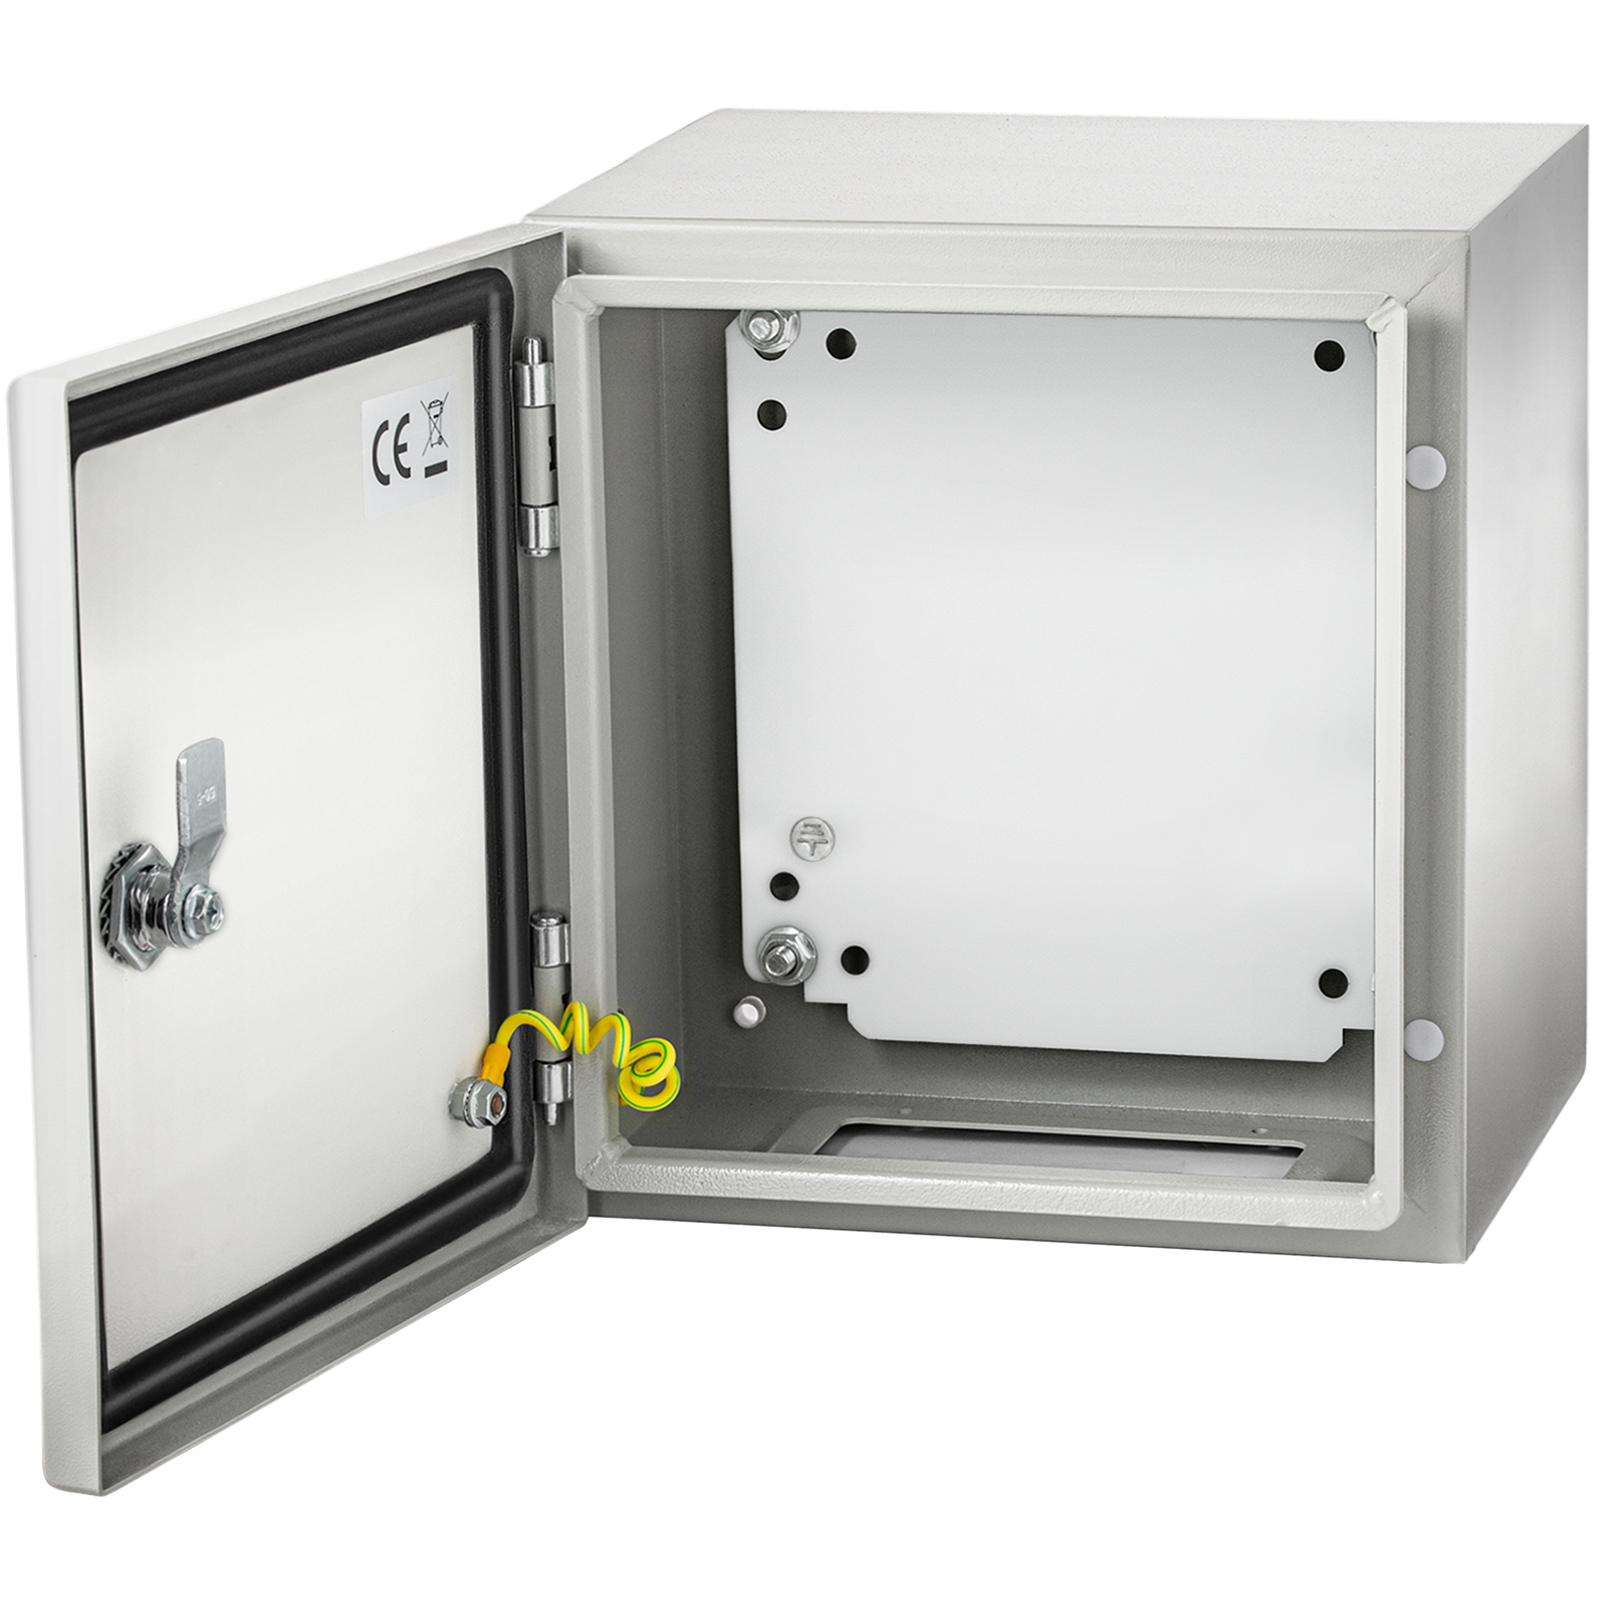 Steel Electrical Enclosure,12x8x6 inch,IP66 Weatherproof Box